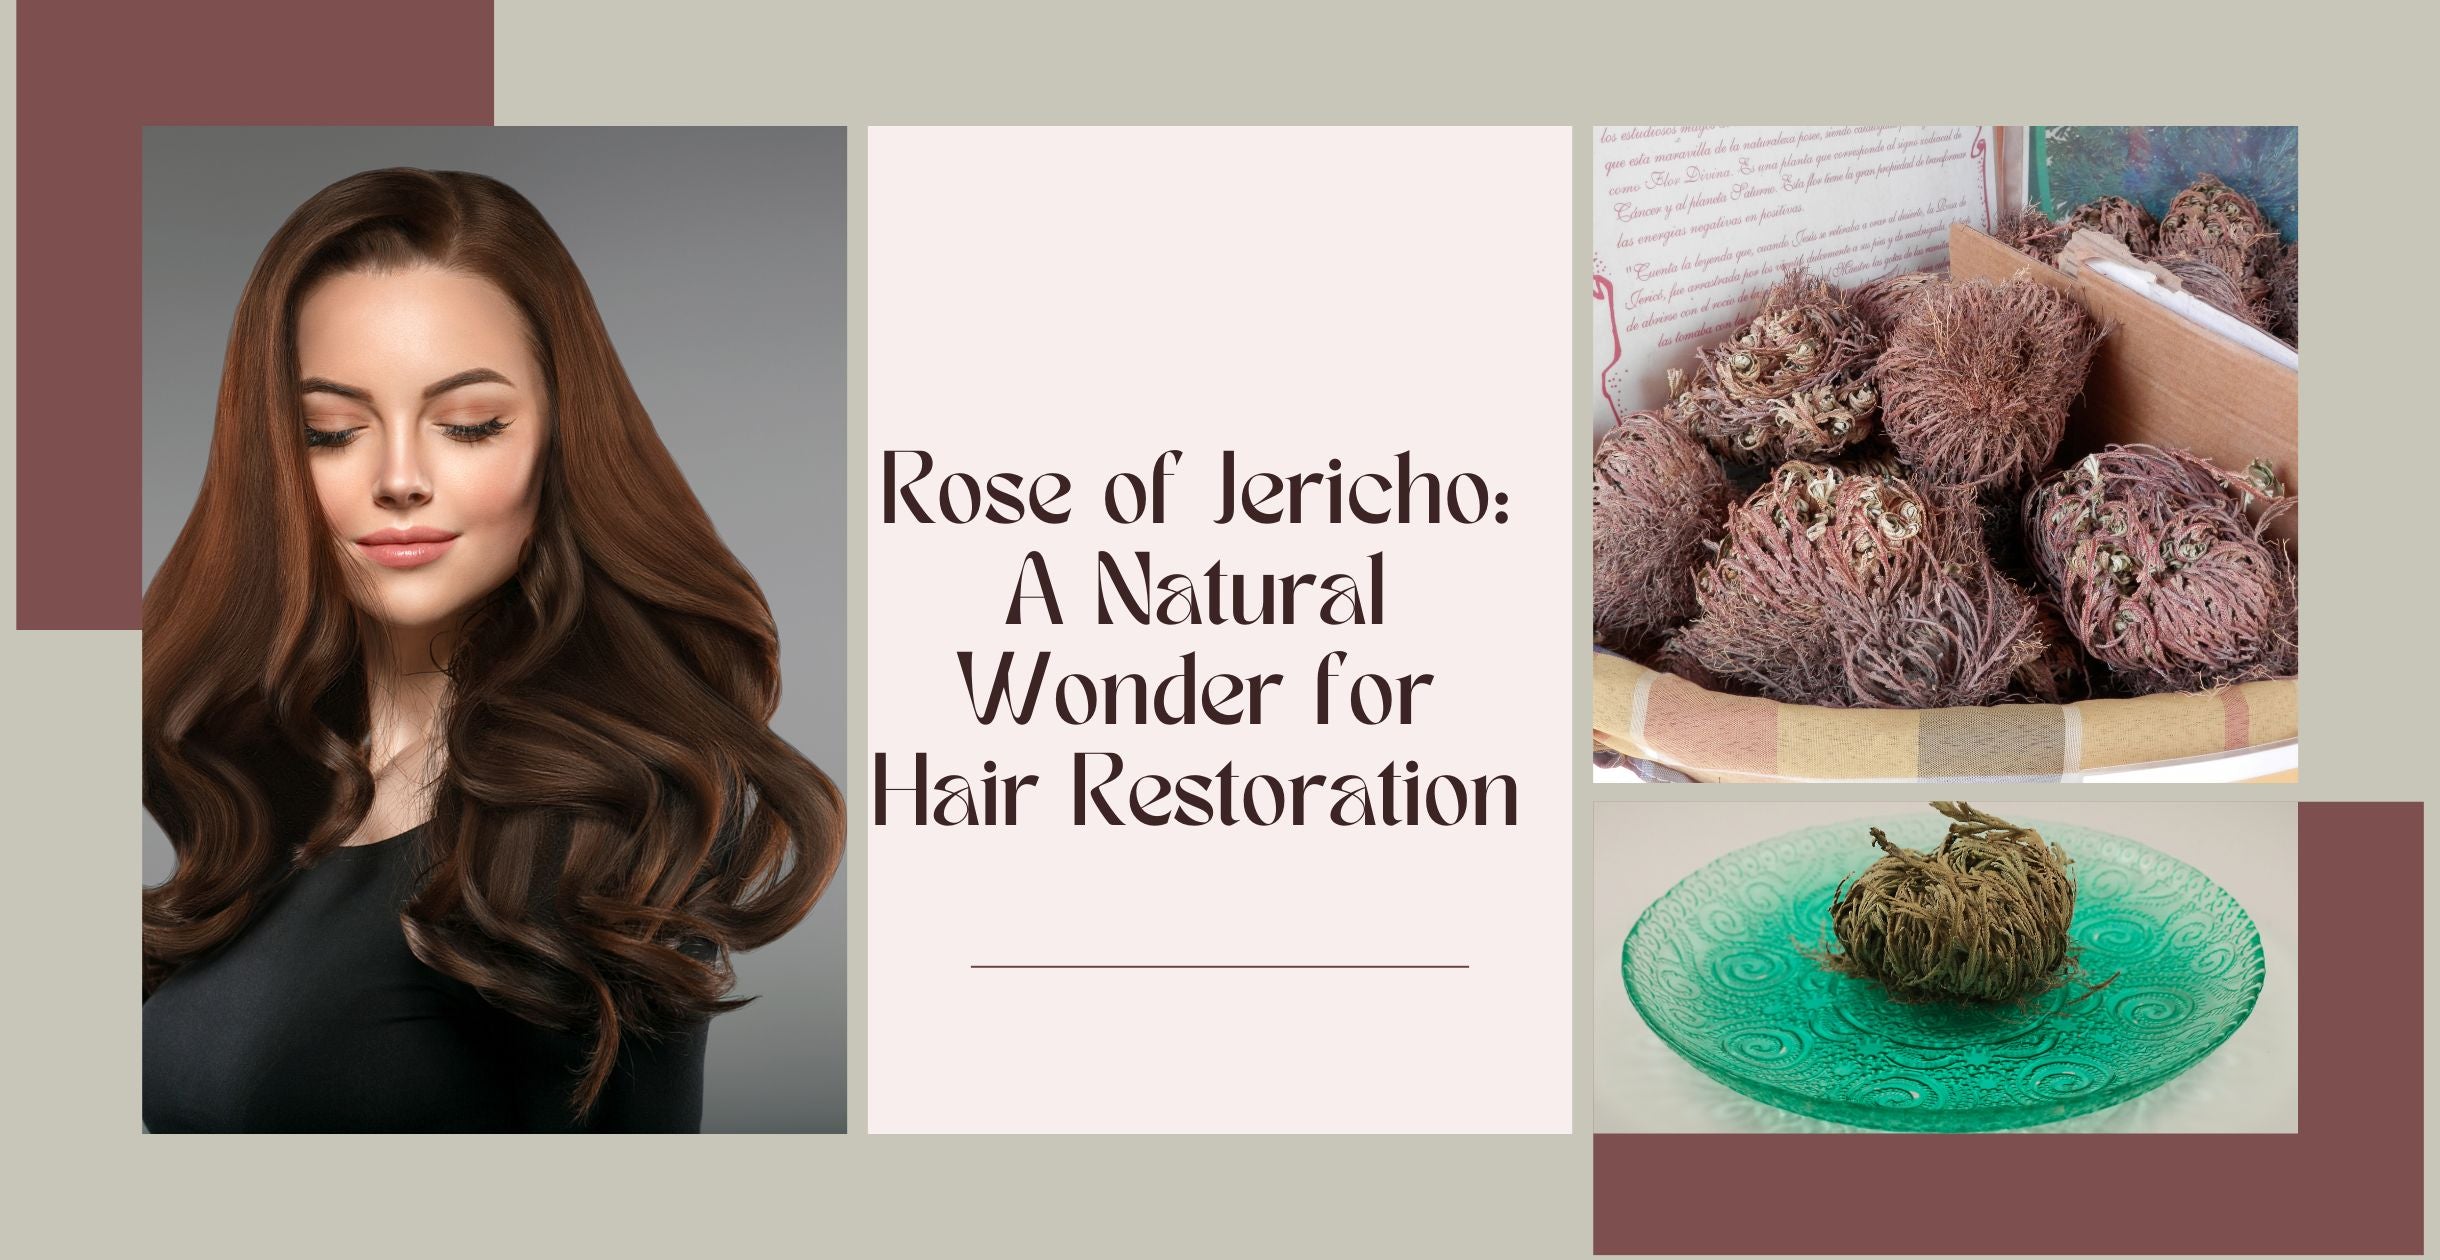 Rose of Jericho: A Natural Wonder for Hair Restoration